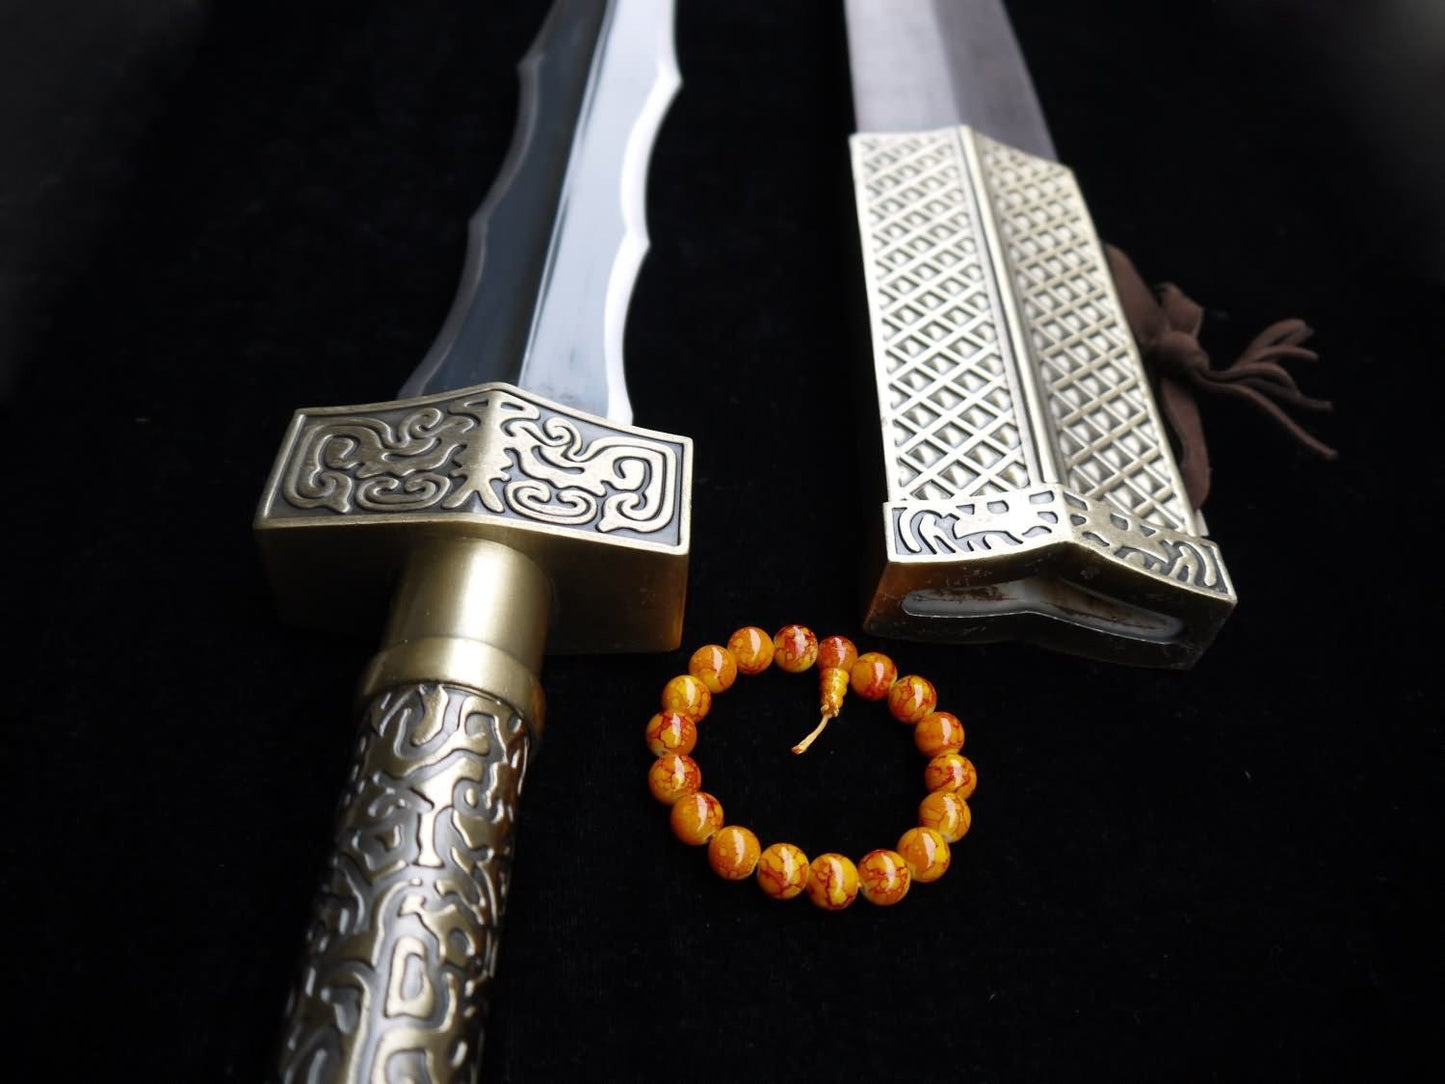 Hua Mulan jian sword,Medium carbon steel black blade,Alloy fittings,Rosewood scabbard,Length 41" - Chinese sword shop